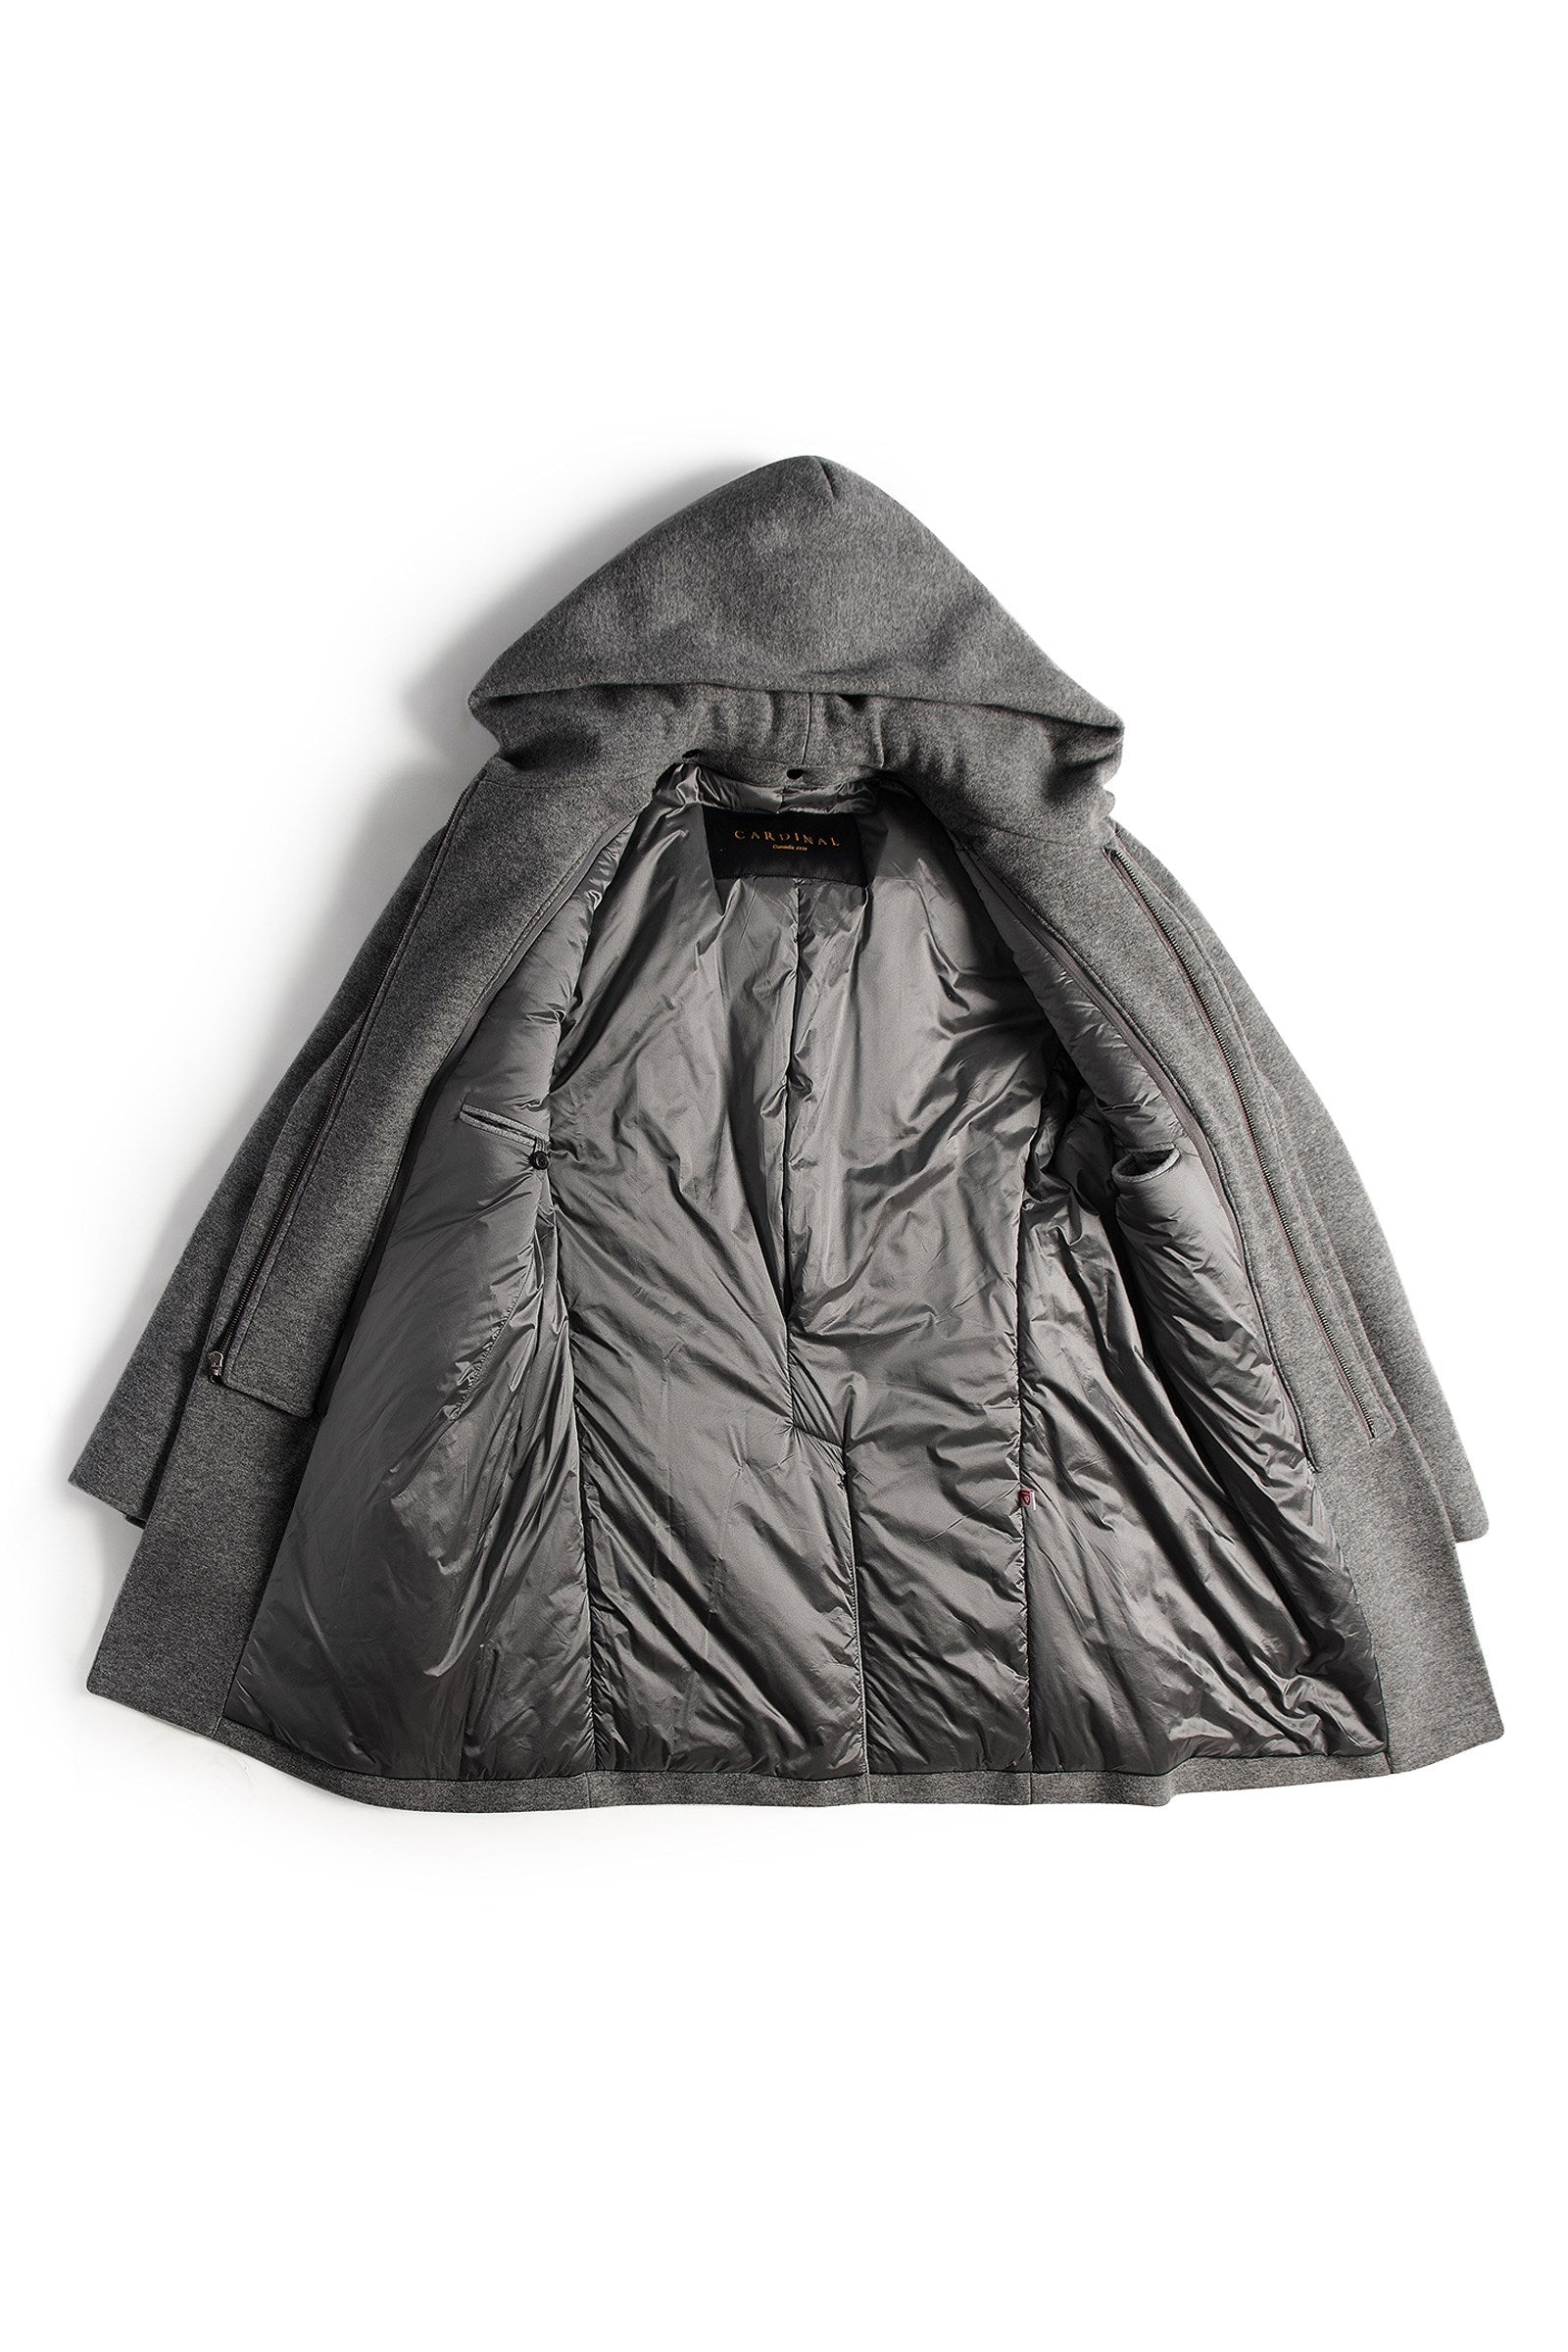 TYSON CHARCOAL TOPCOAT - MENS - Cardinal of Canada-CA - Tyson - charcoal wool topcoat 36 inch length